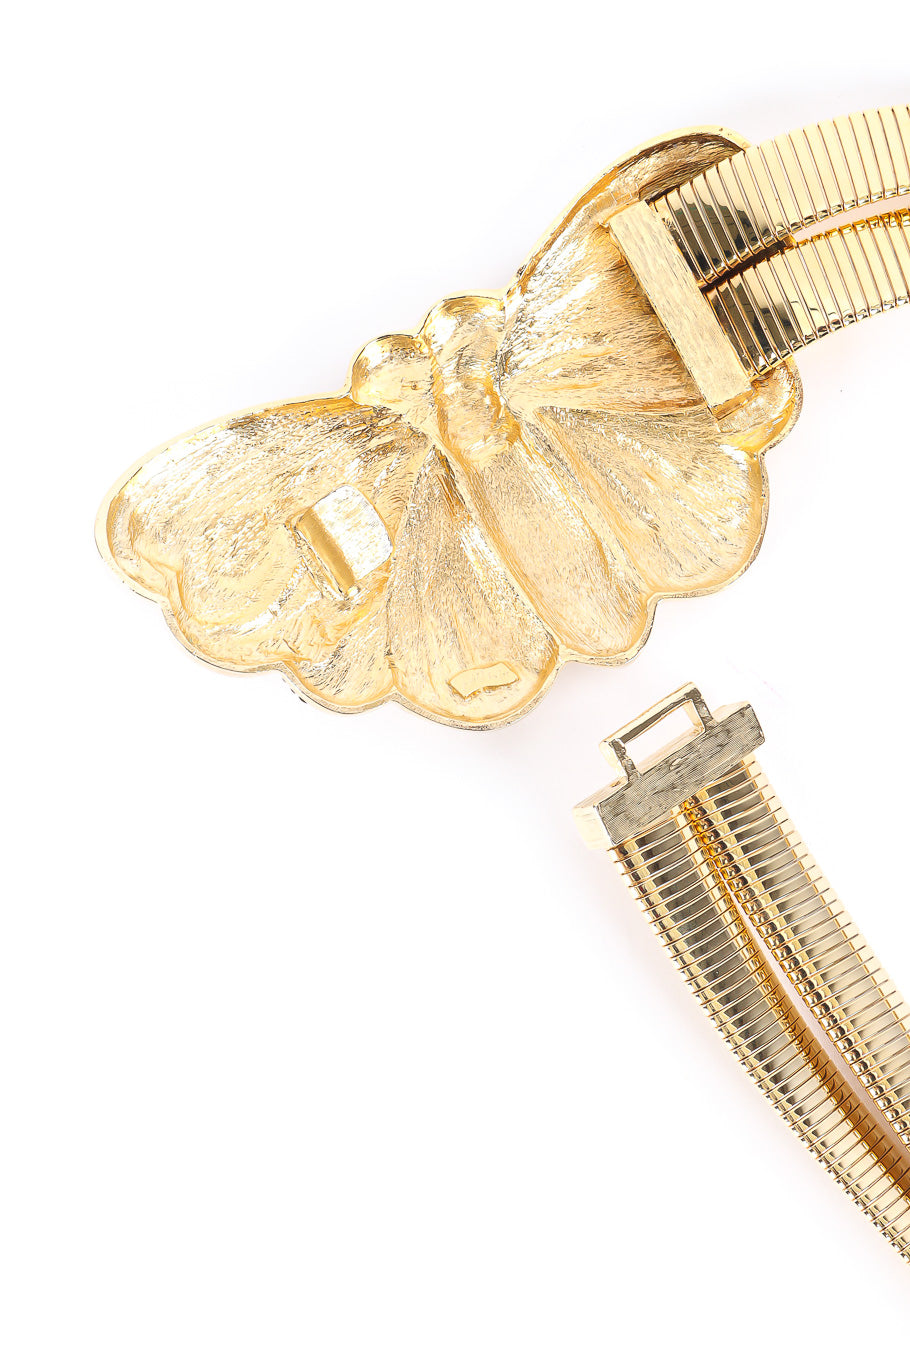 Jeweled butterfly belt by Judith Leiber Back of Belt back buckle close @recessla